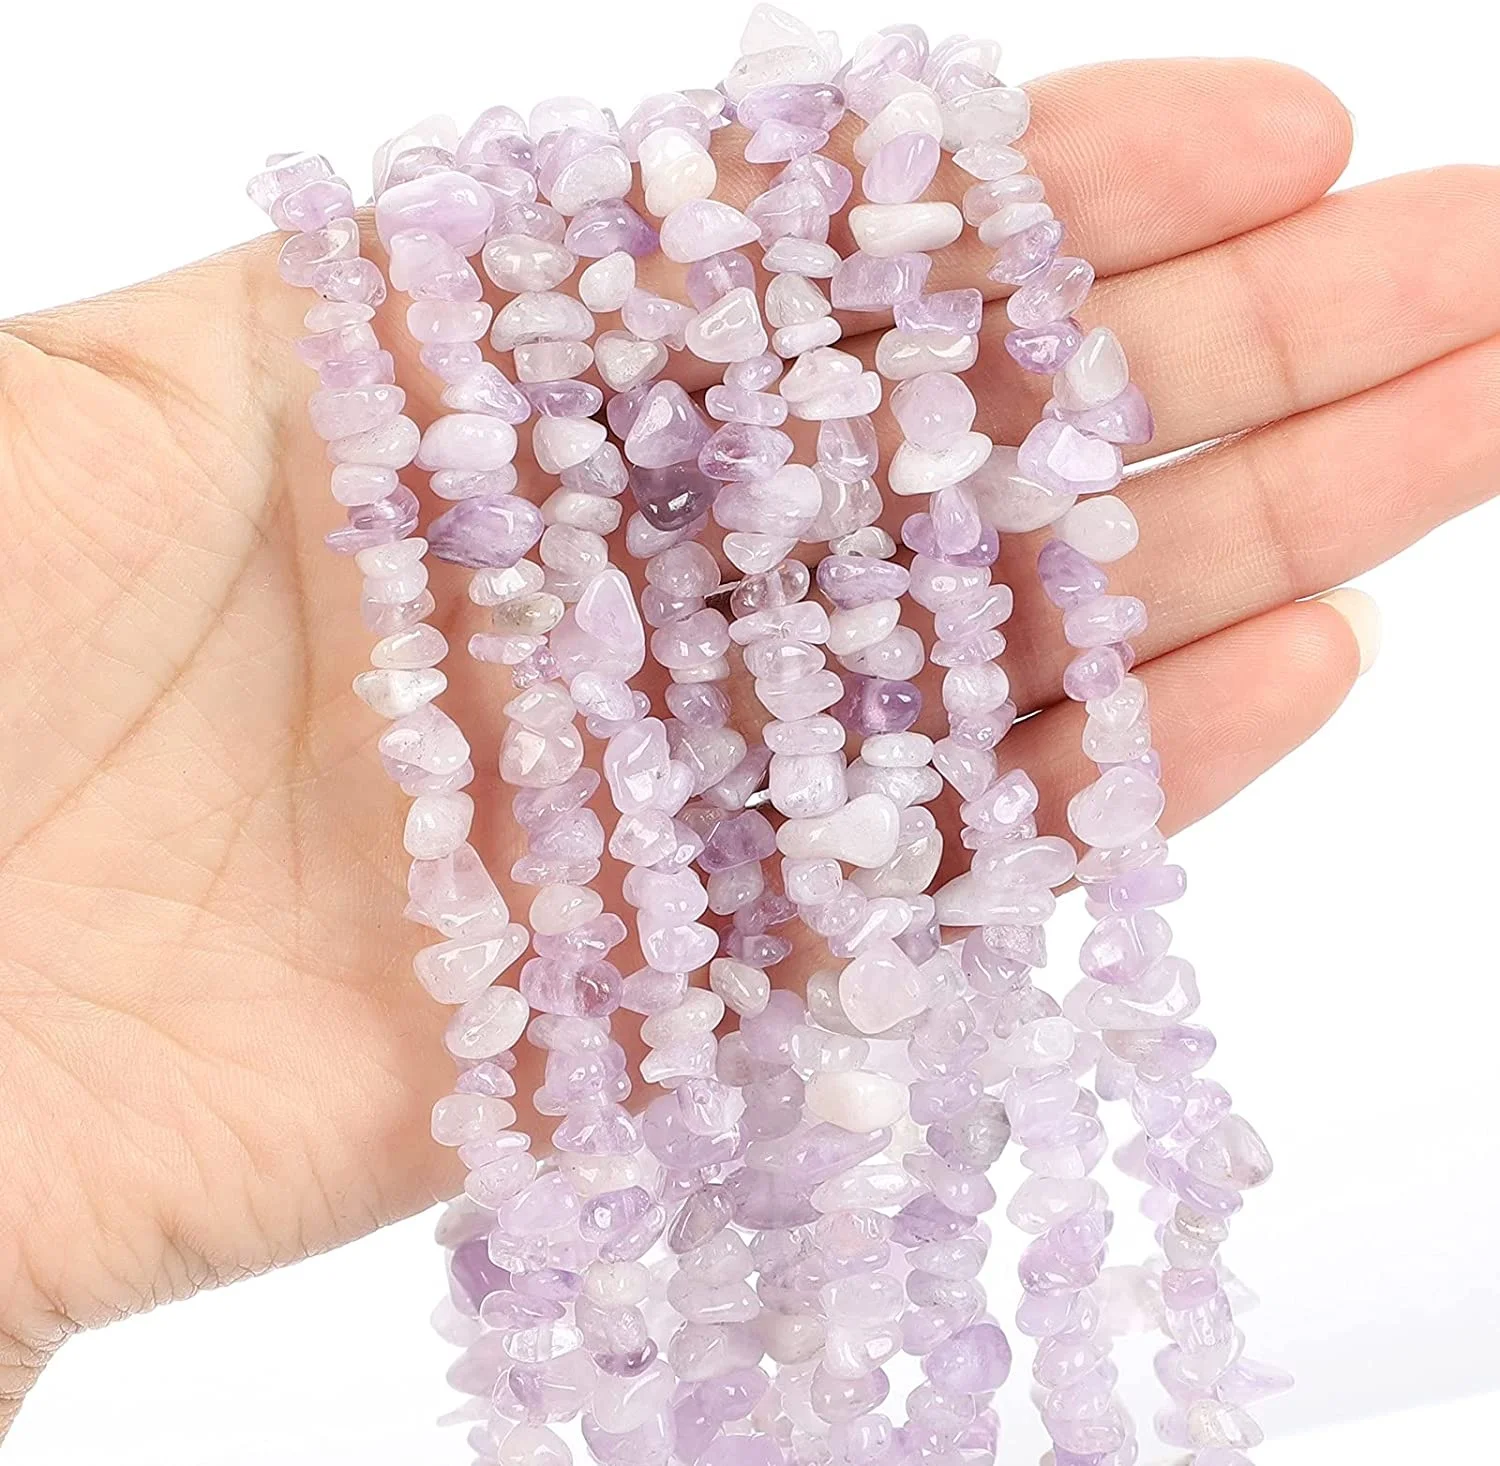 

Wholesale Natural Purple Agate Crystal Stone Beads Women Jewelry Making Accessories Gemstone Loose Irregular Stone Beads